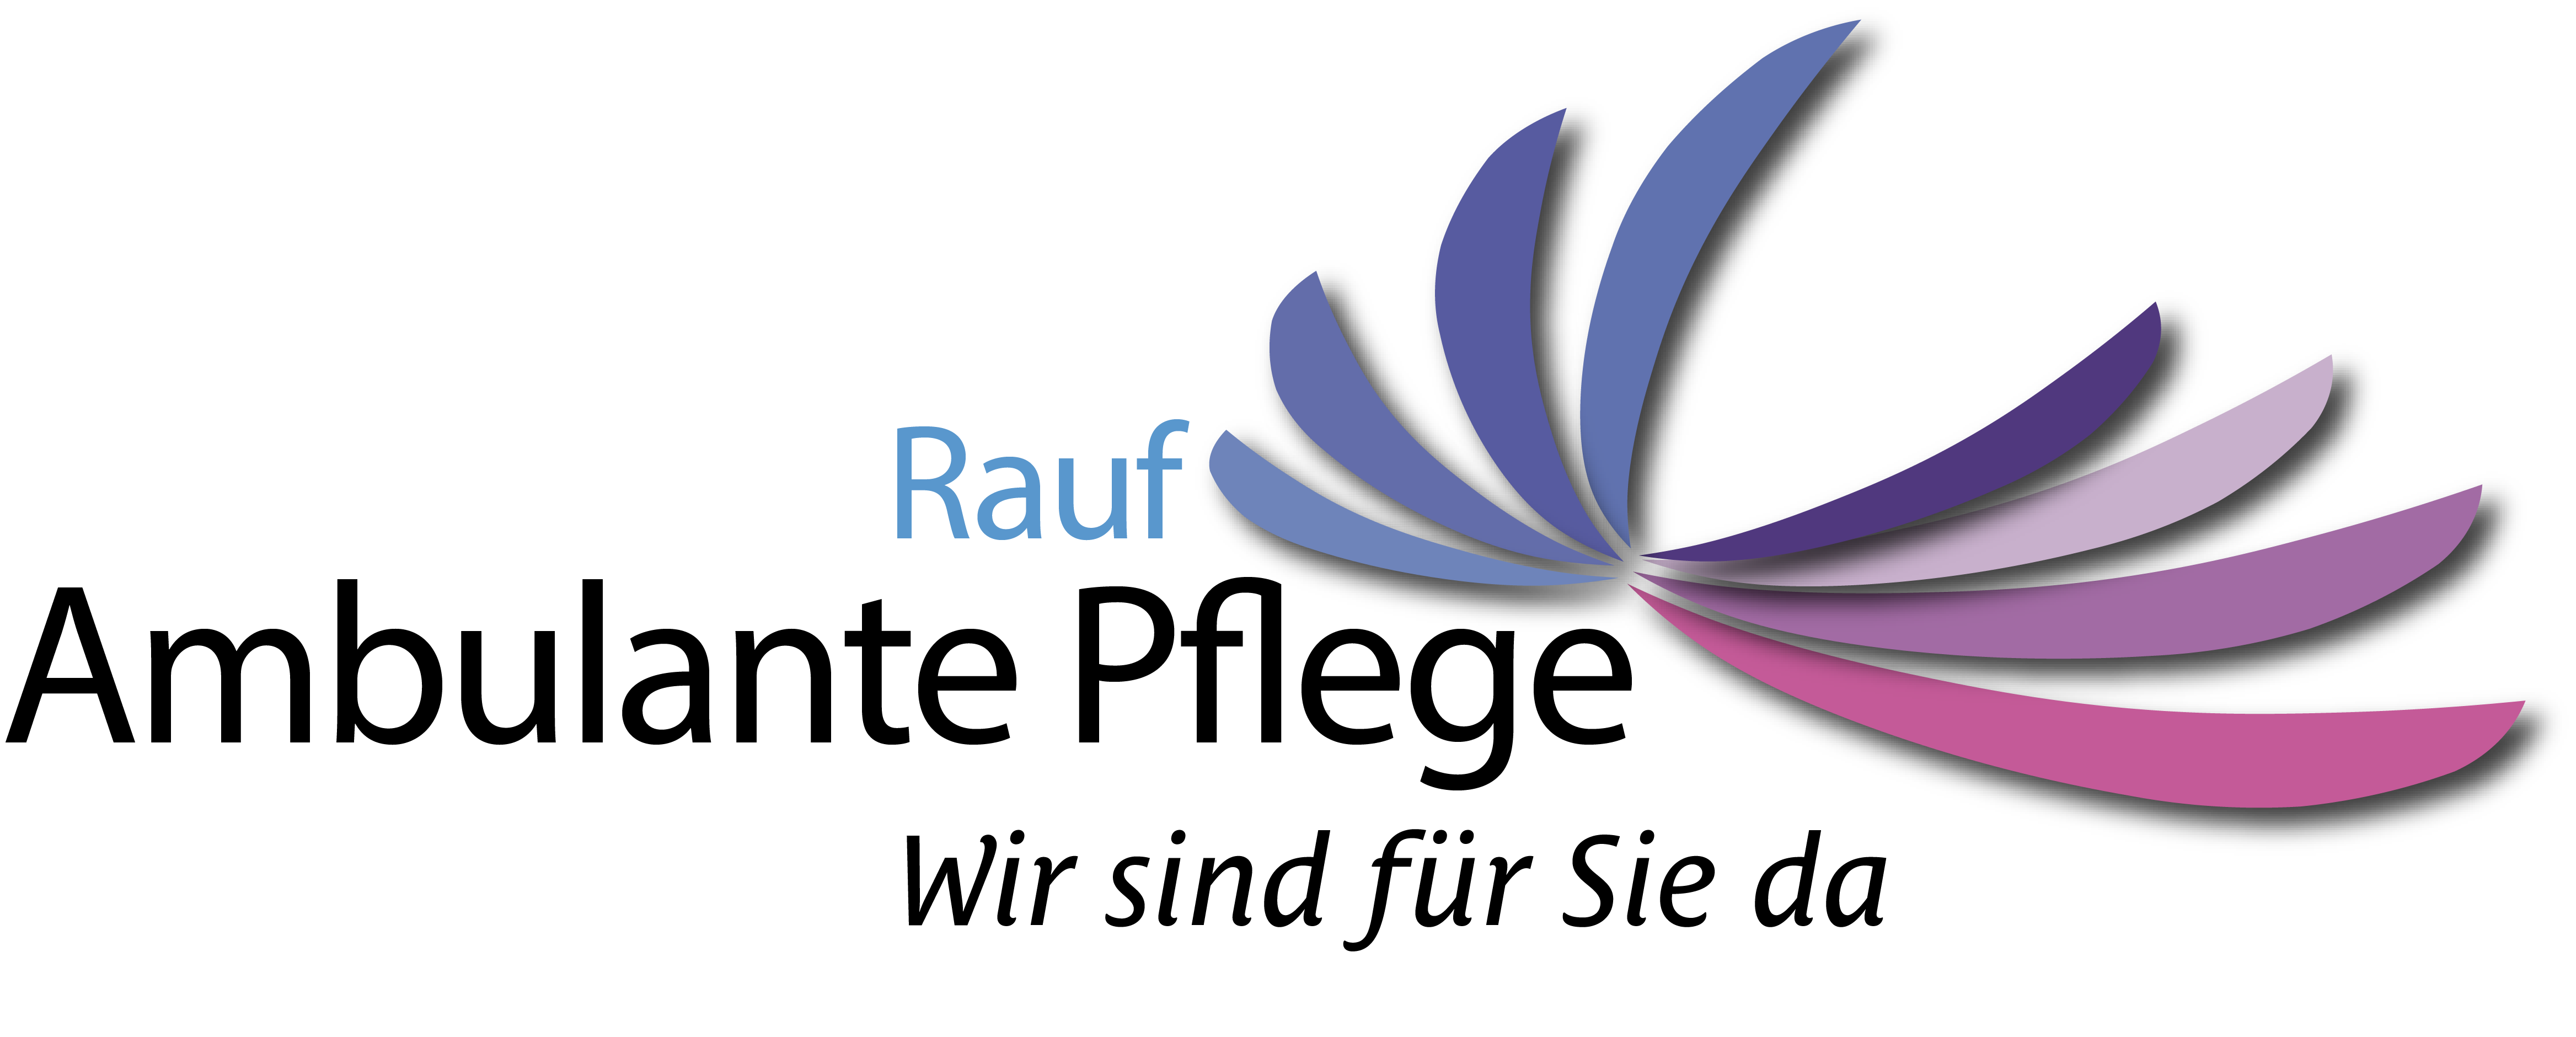 Ambulanter Pflegedienst Rauf GmbH & Co. KG